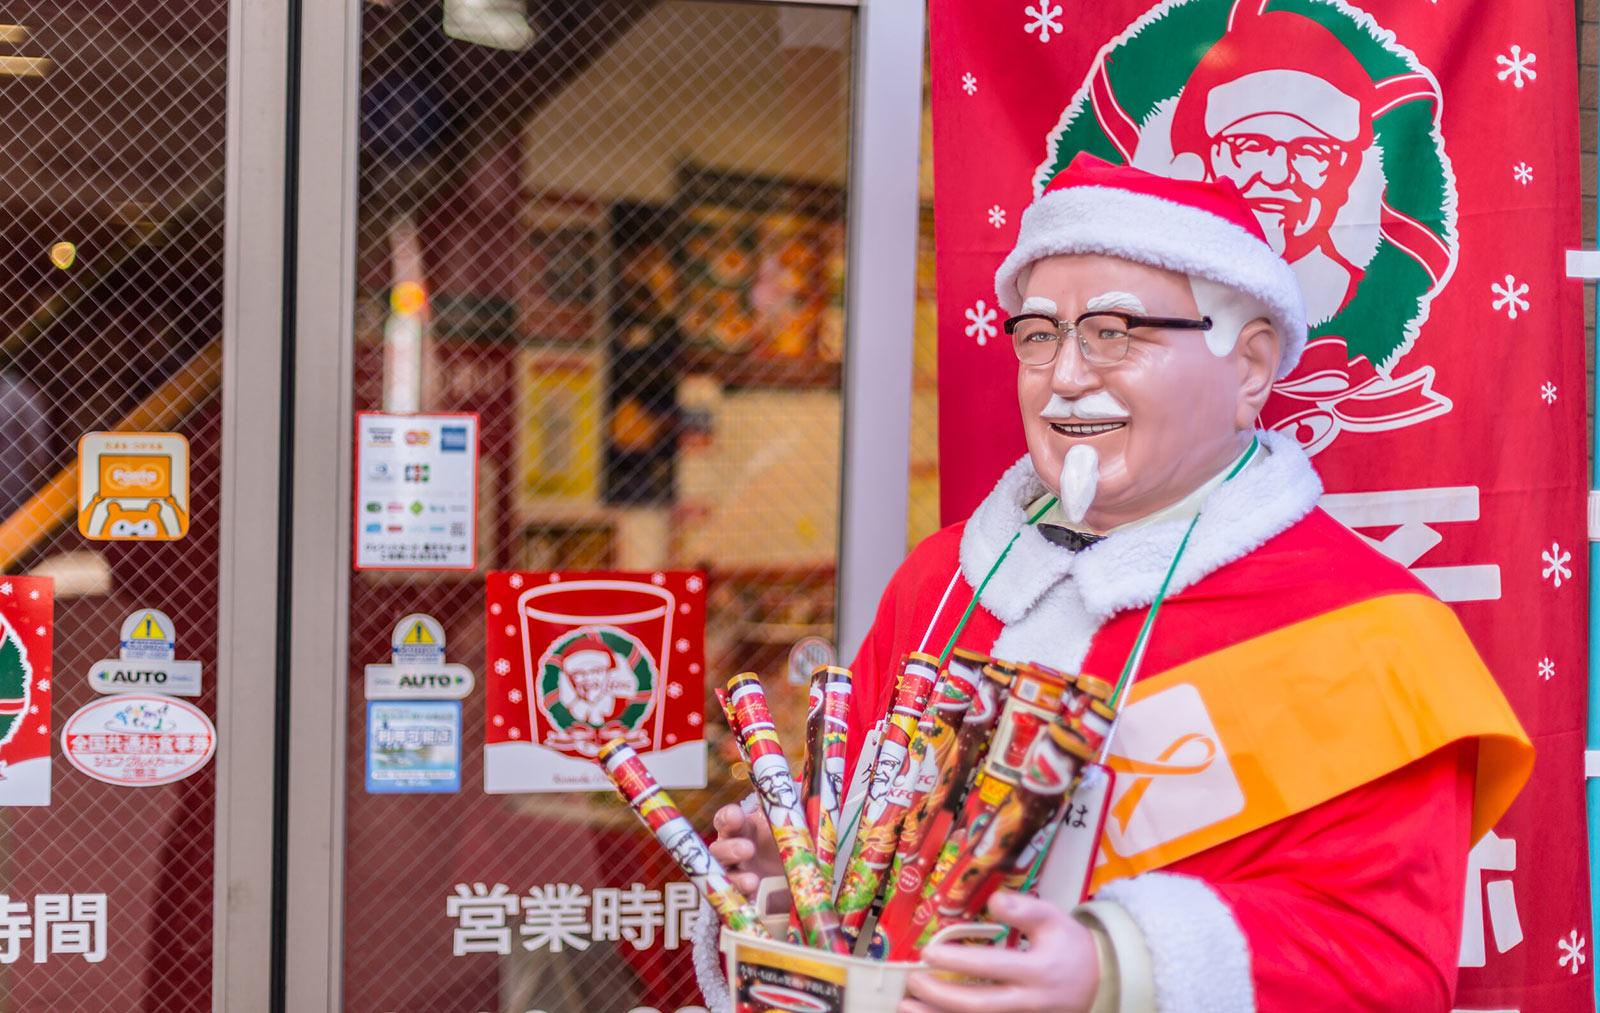 Kentucky Fried Chicken Santa claus in Winter christmas season promotion, Osaka japan